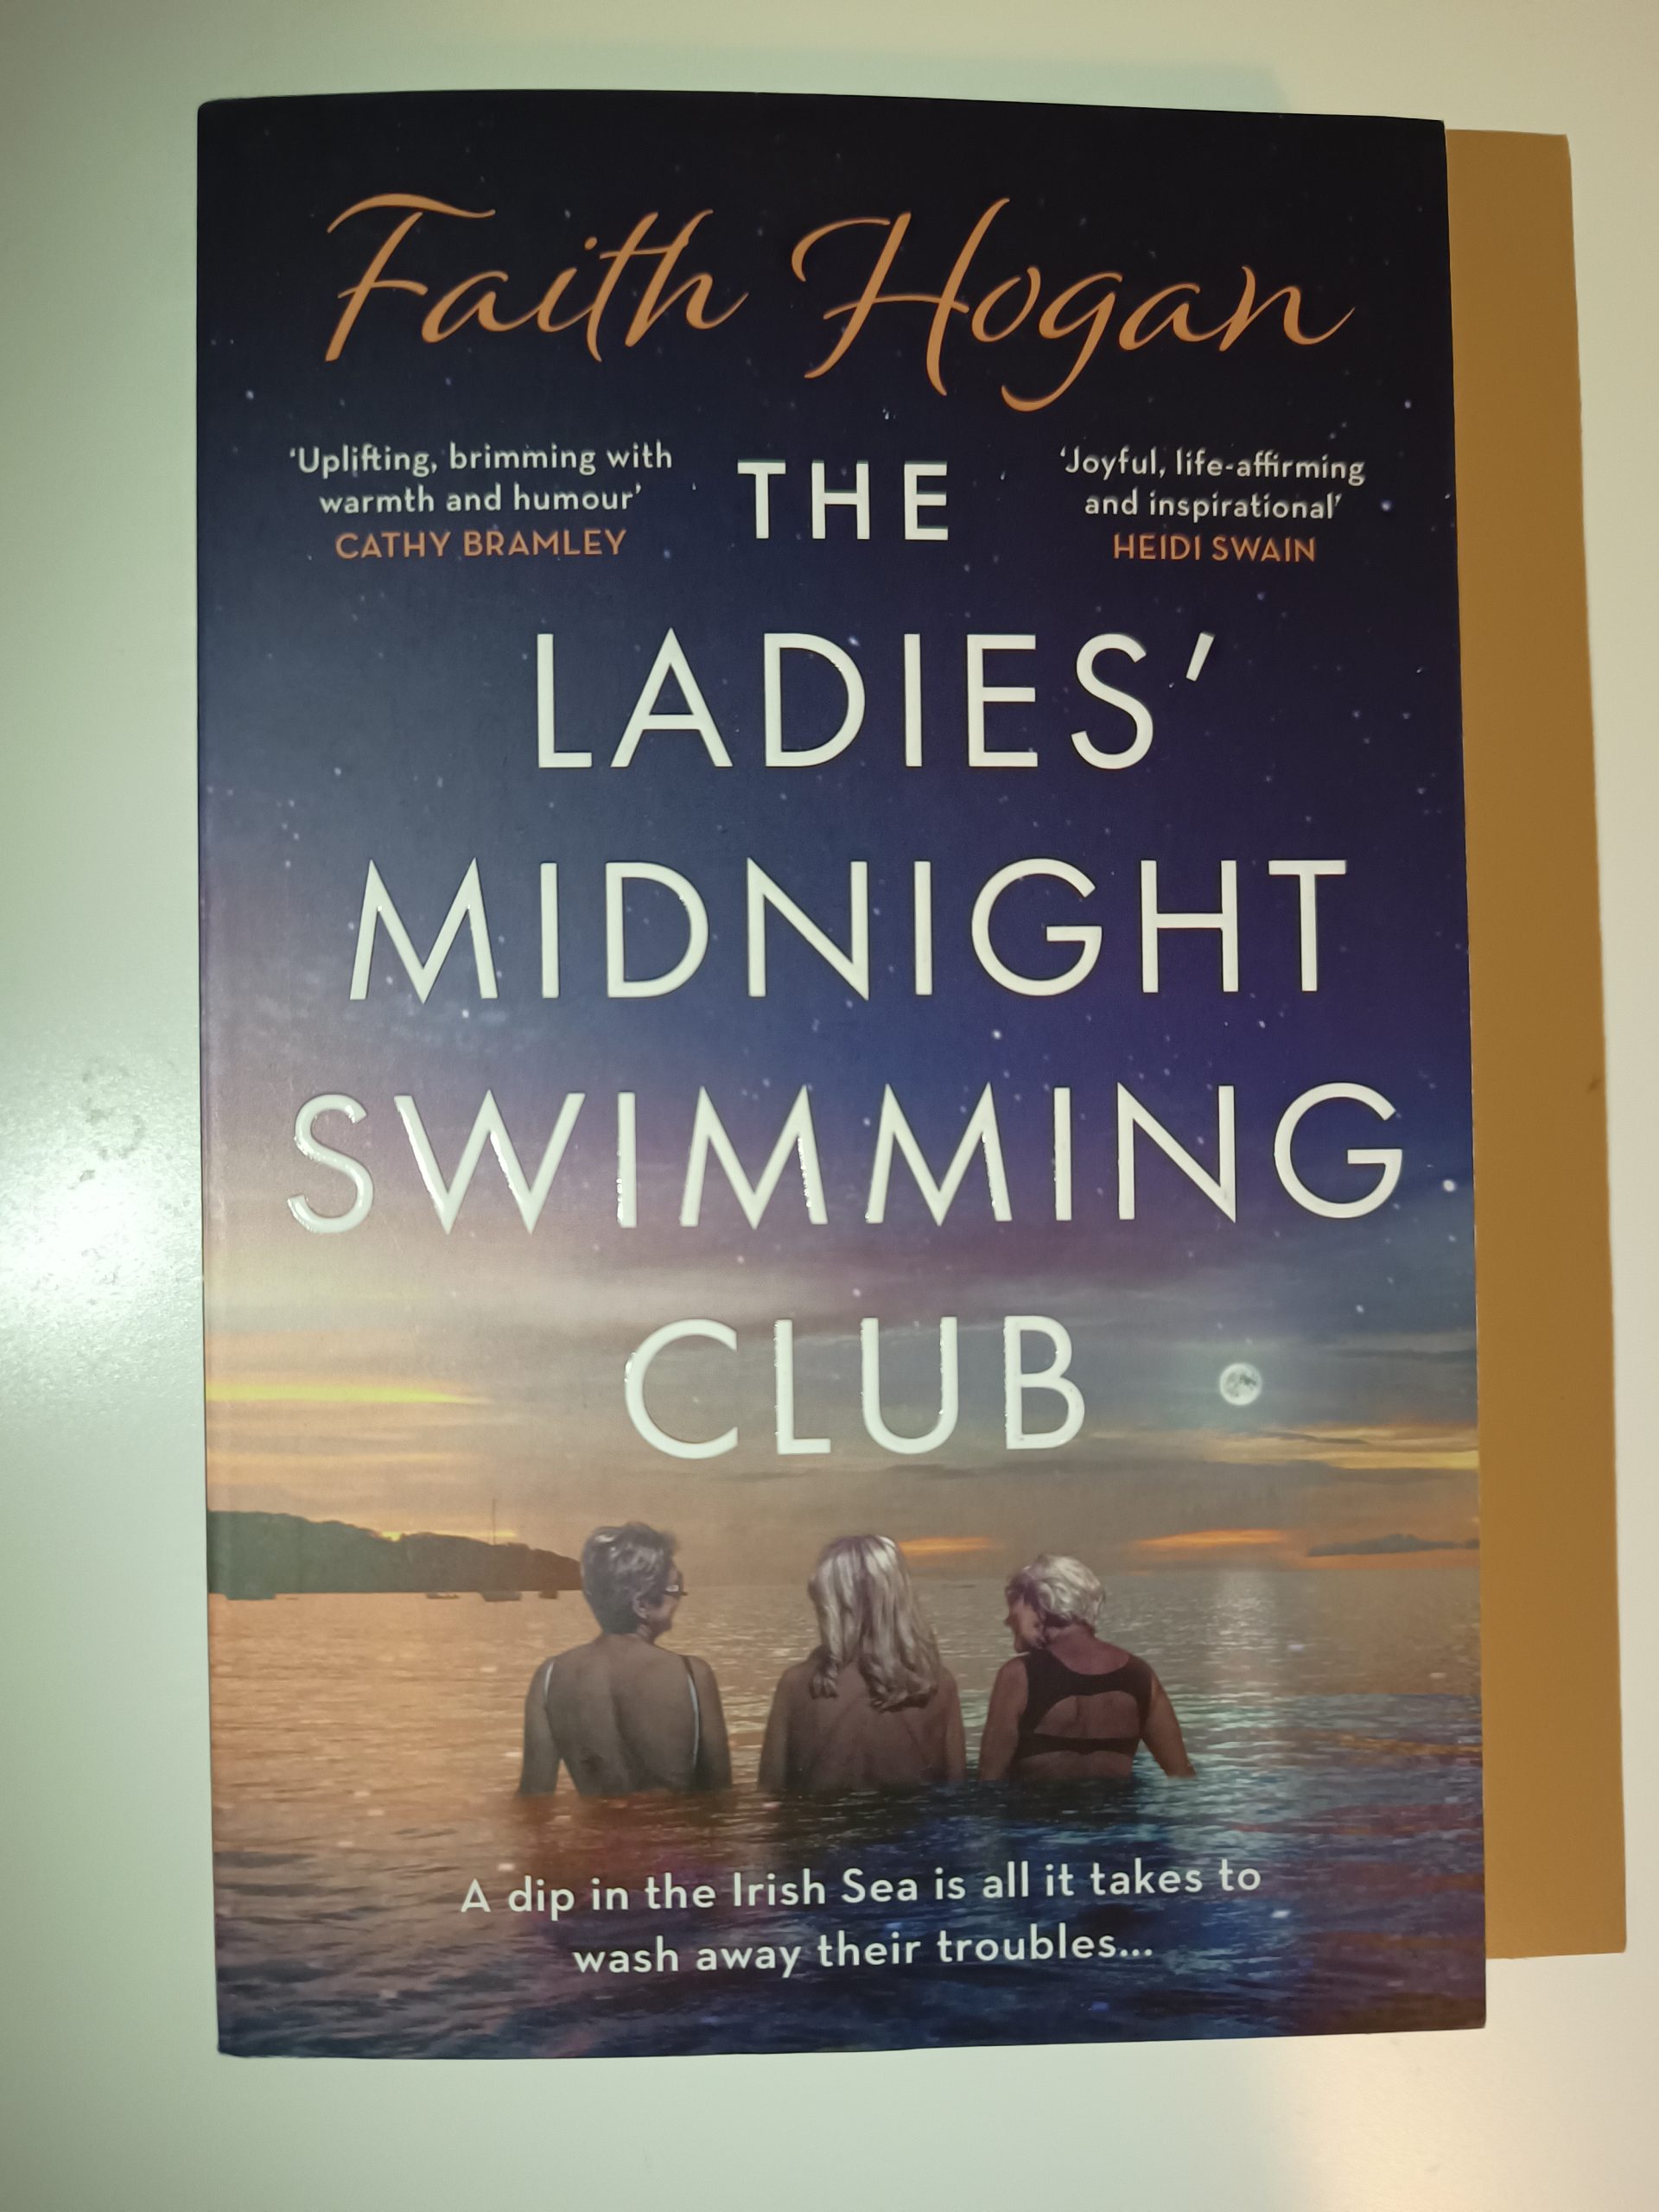 The Ladies Midnight Swimming Club - Faith Hogan